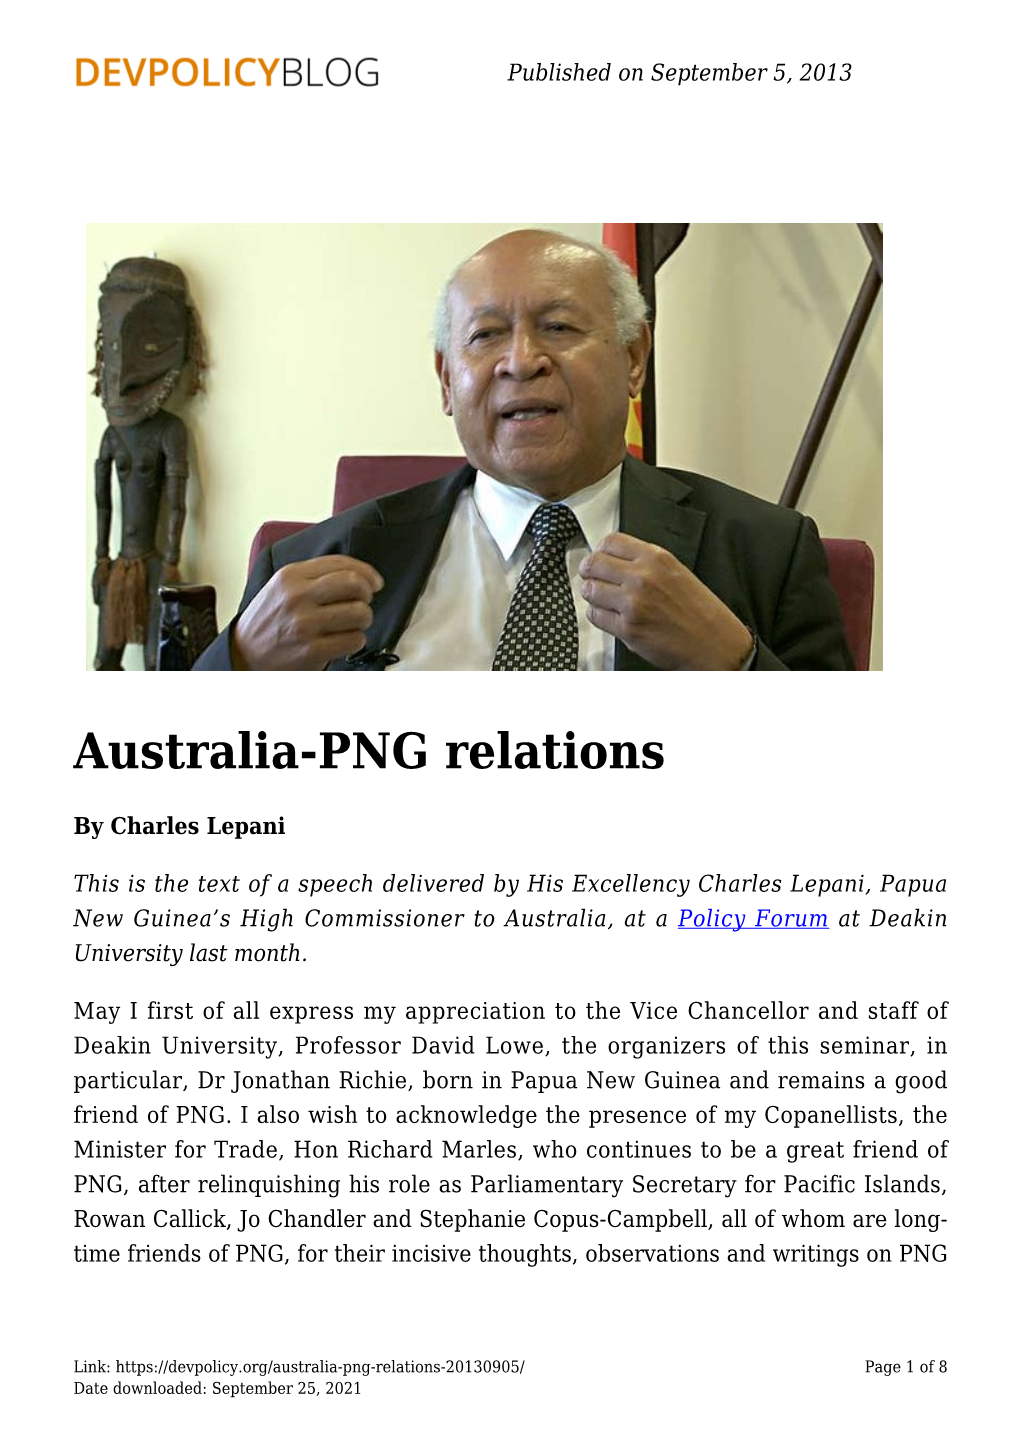 Australia-PNG Relations